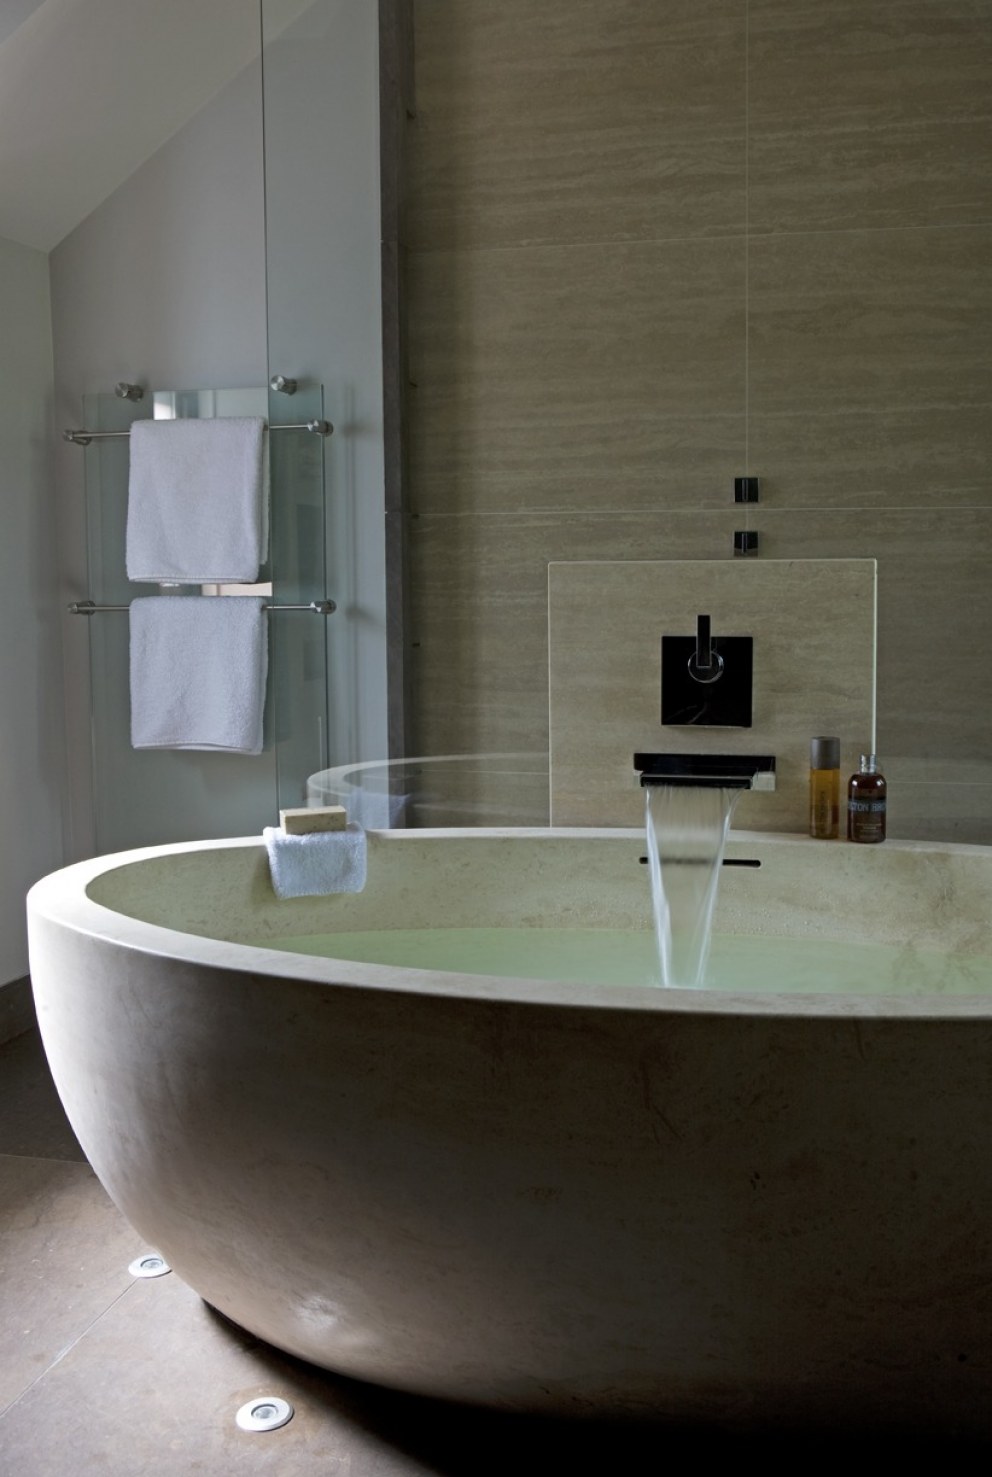 Surrey Mansion | Master Bathroom | Interior Designers